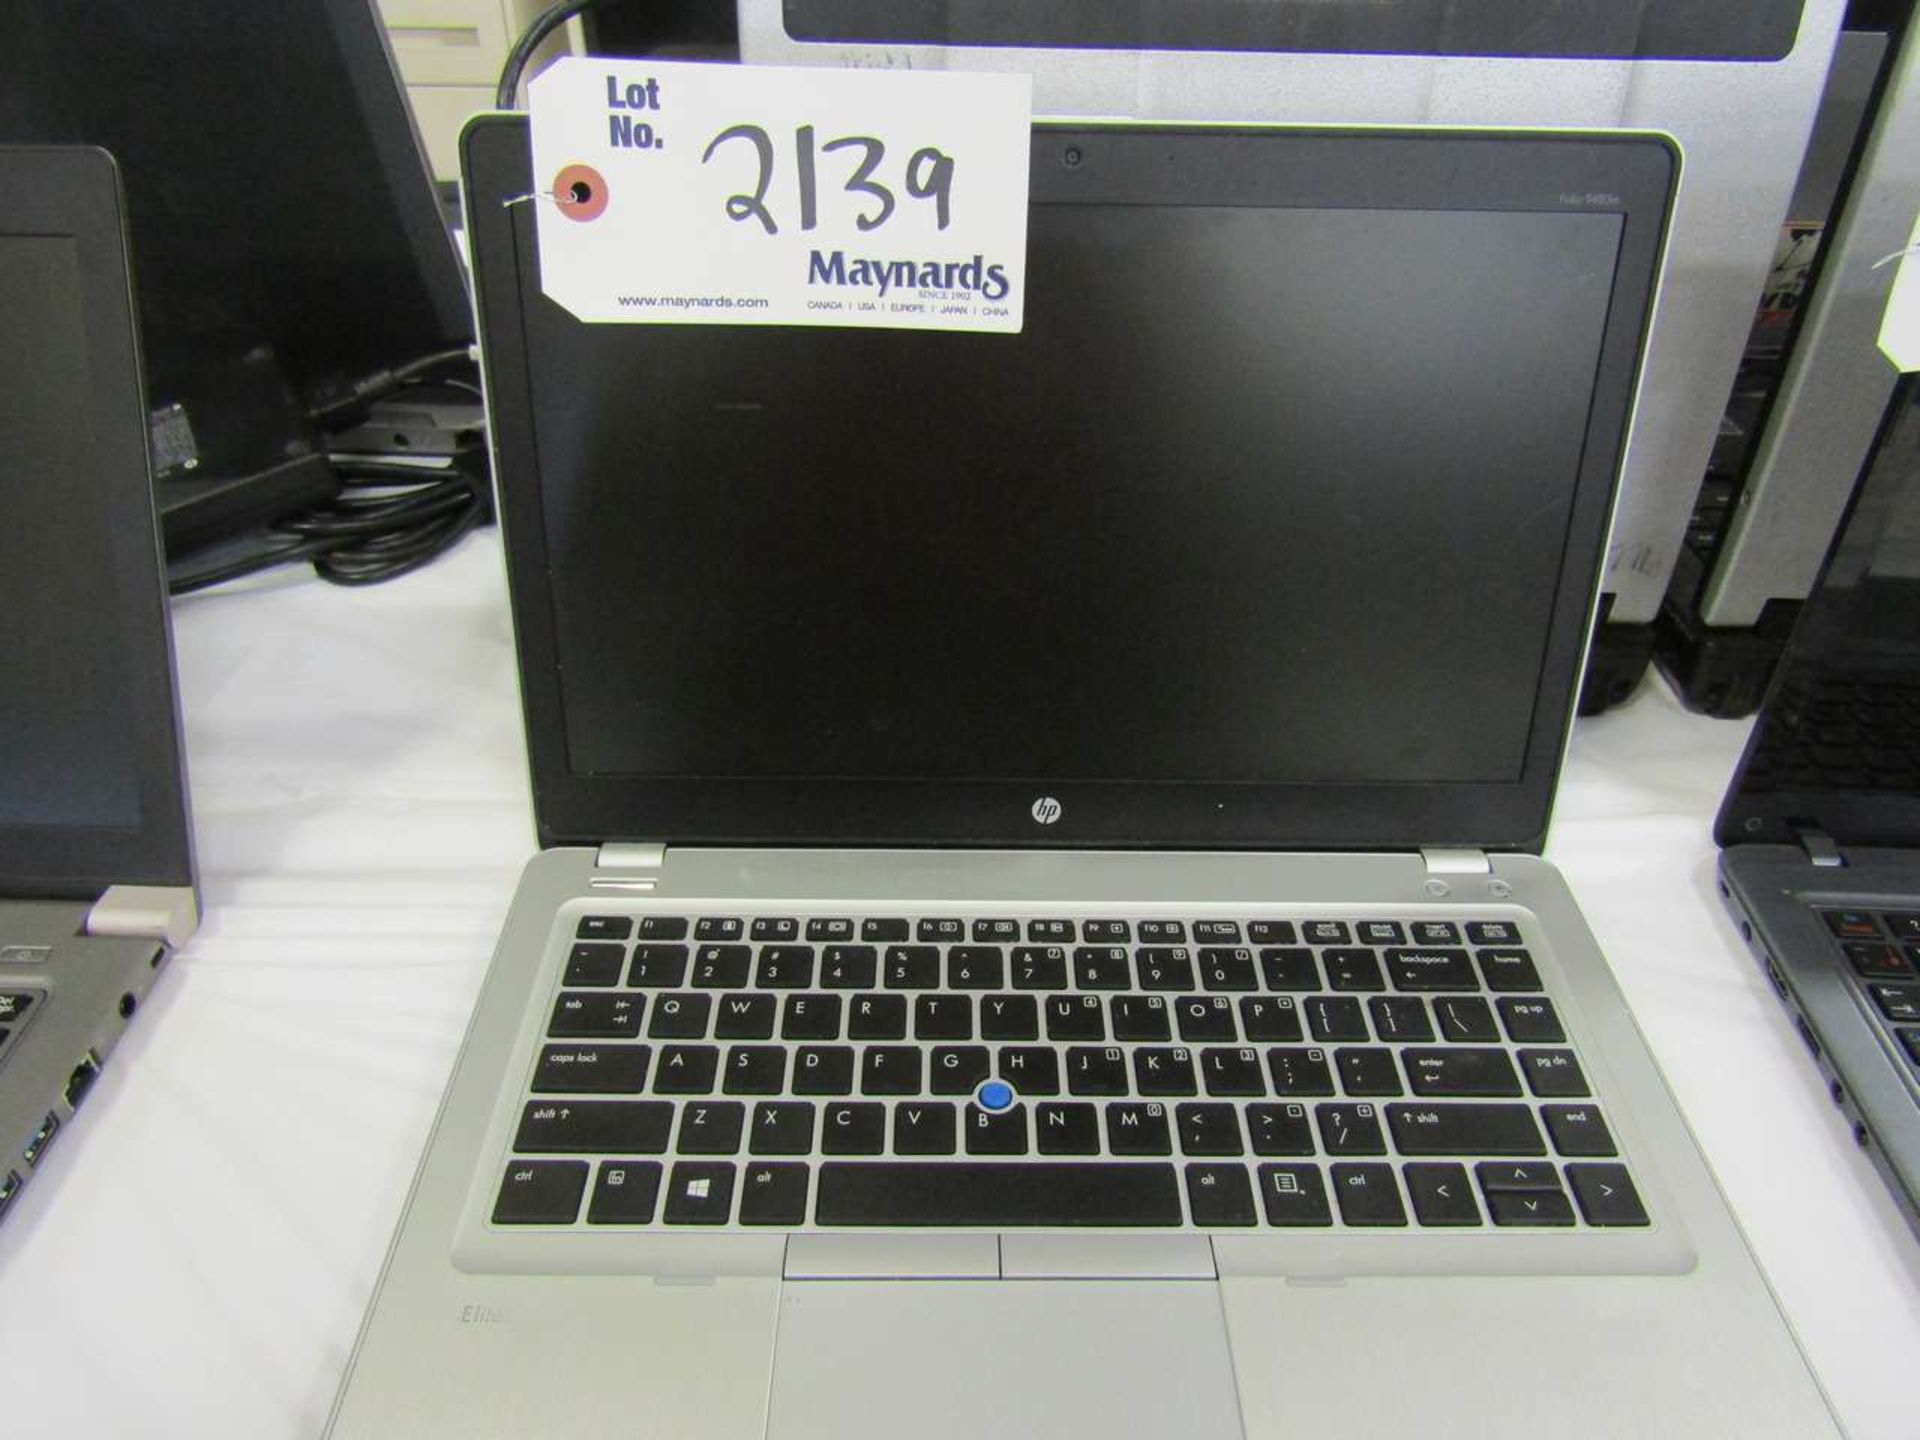 HP Elite Book Laptop w/ Windows 10 License Key